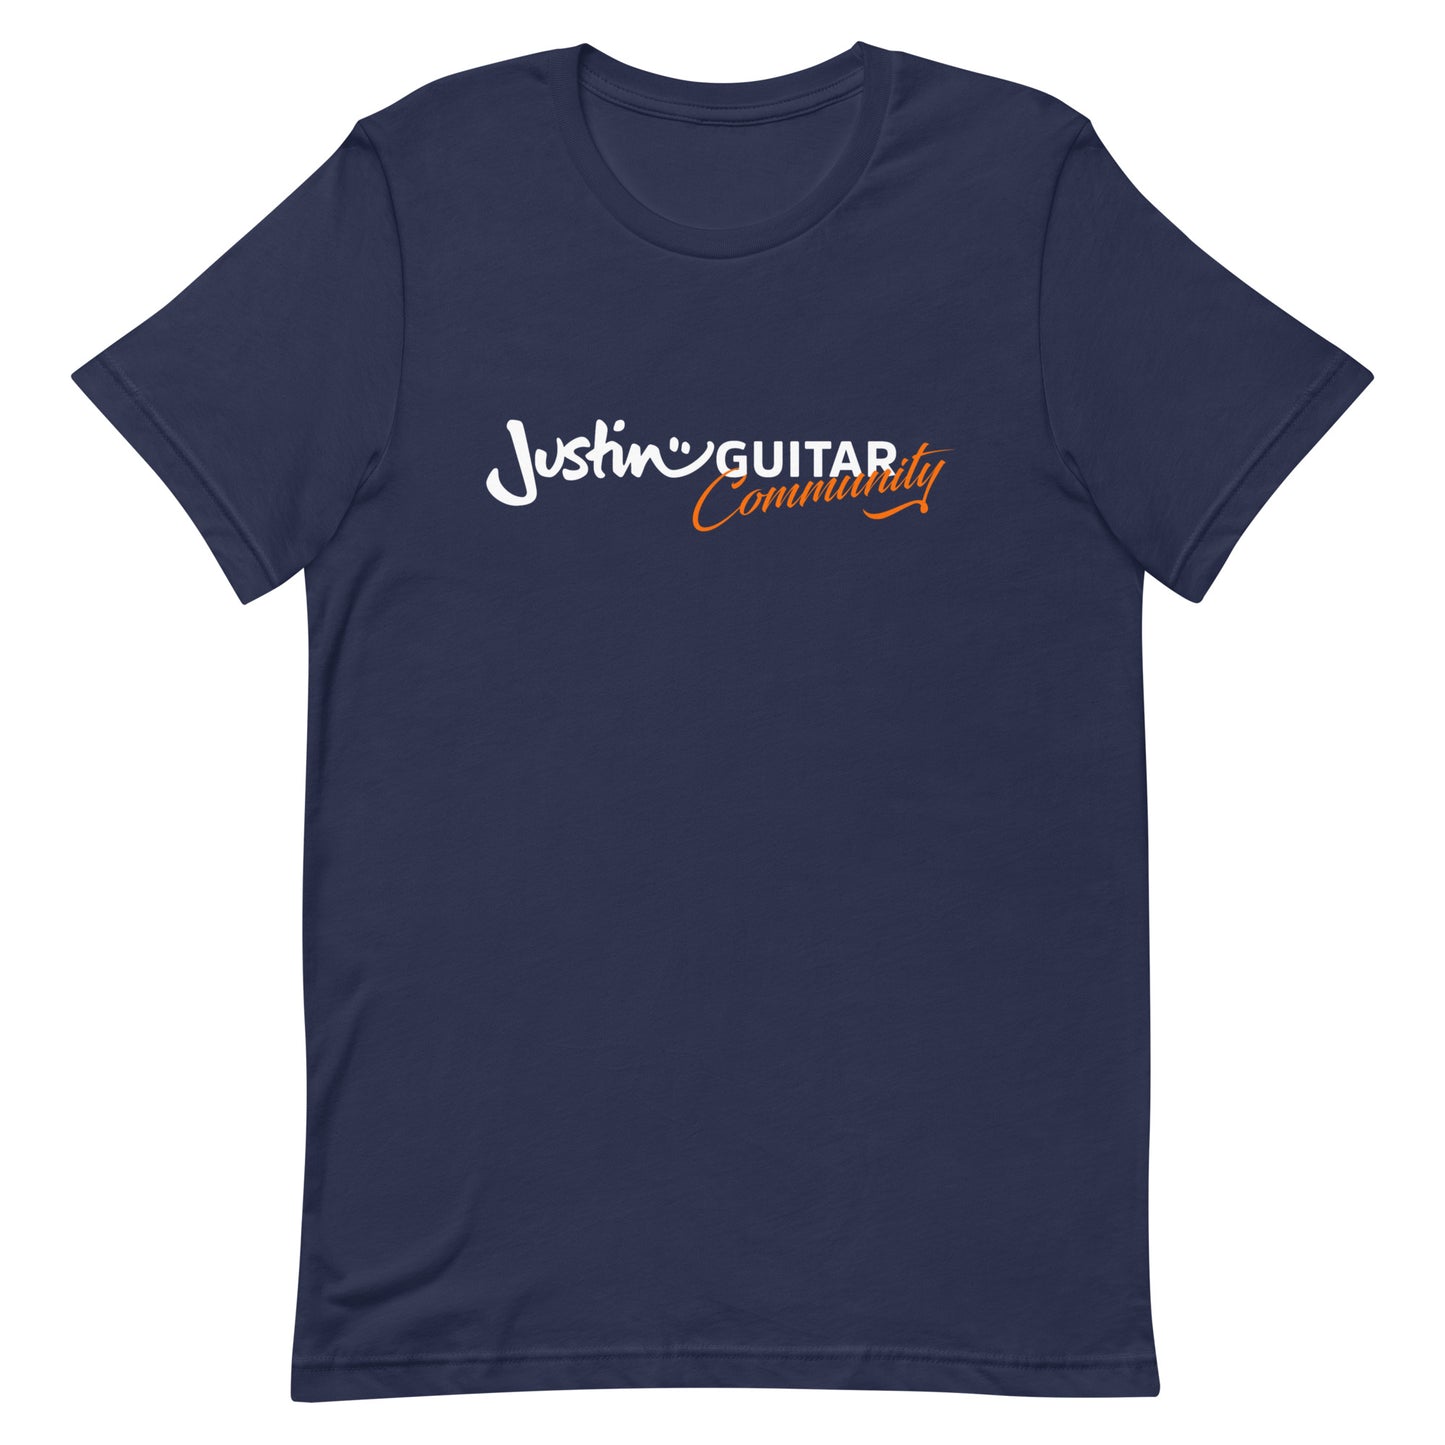 Navy tshirt with JustinGuitar Community logo.